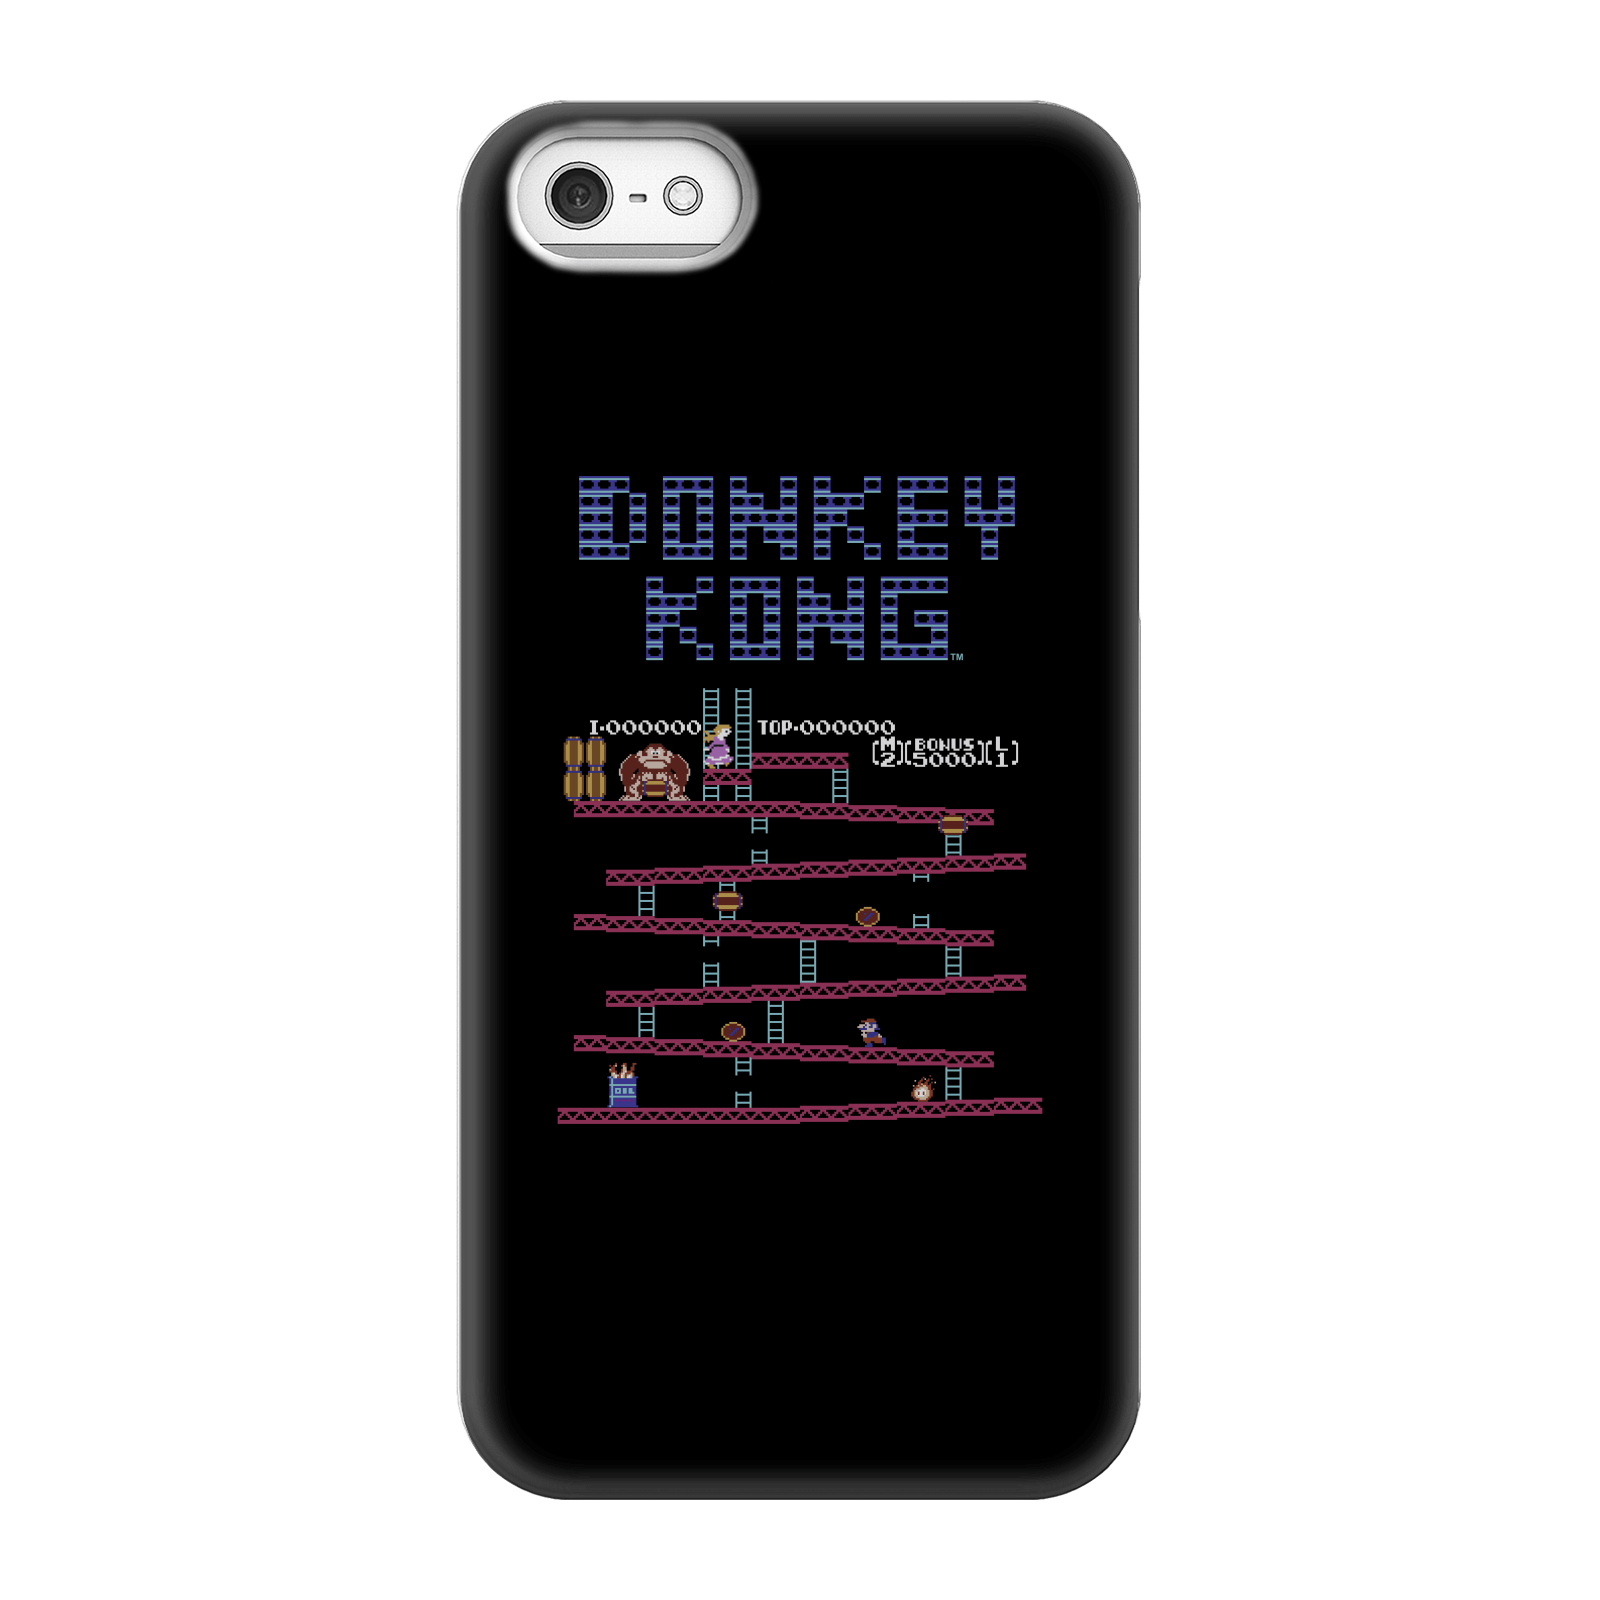 Nintendo Donkey Kong Retro Phone Case - iPhone 5/5s - Snap Case - Gloss